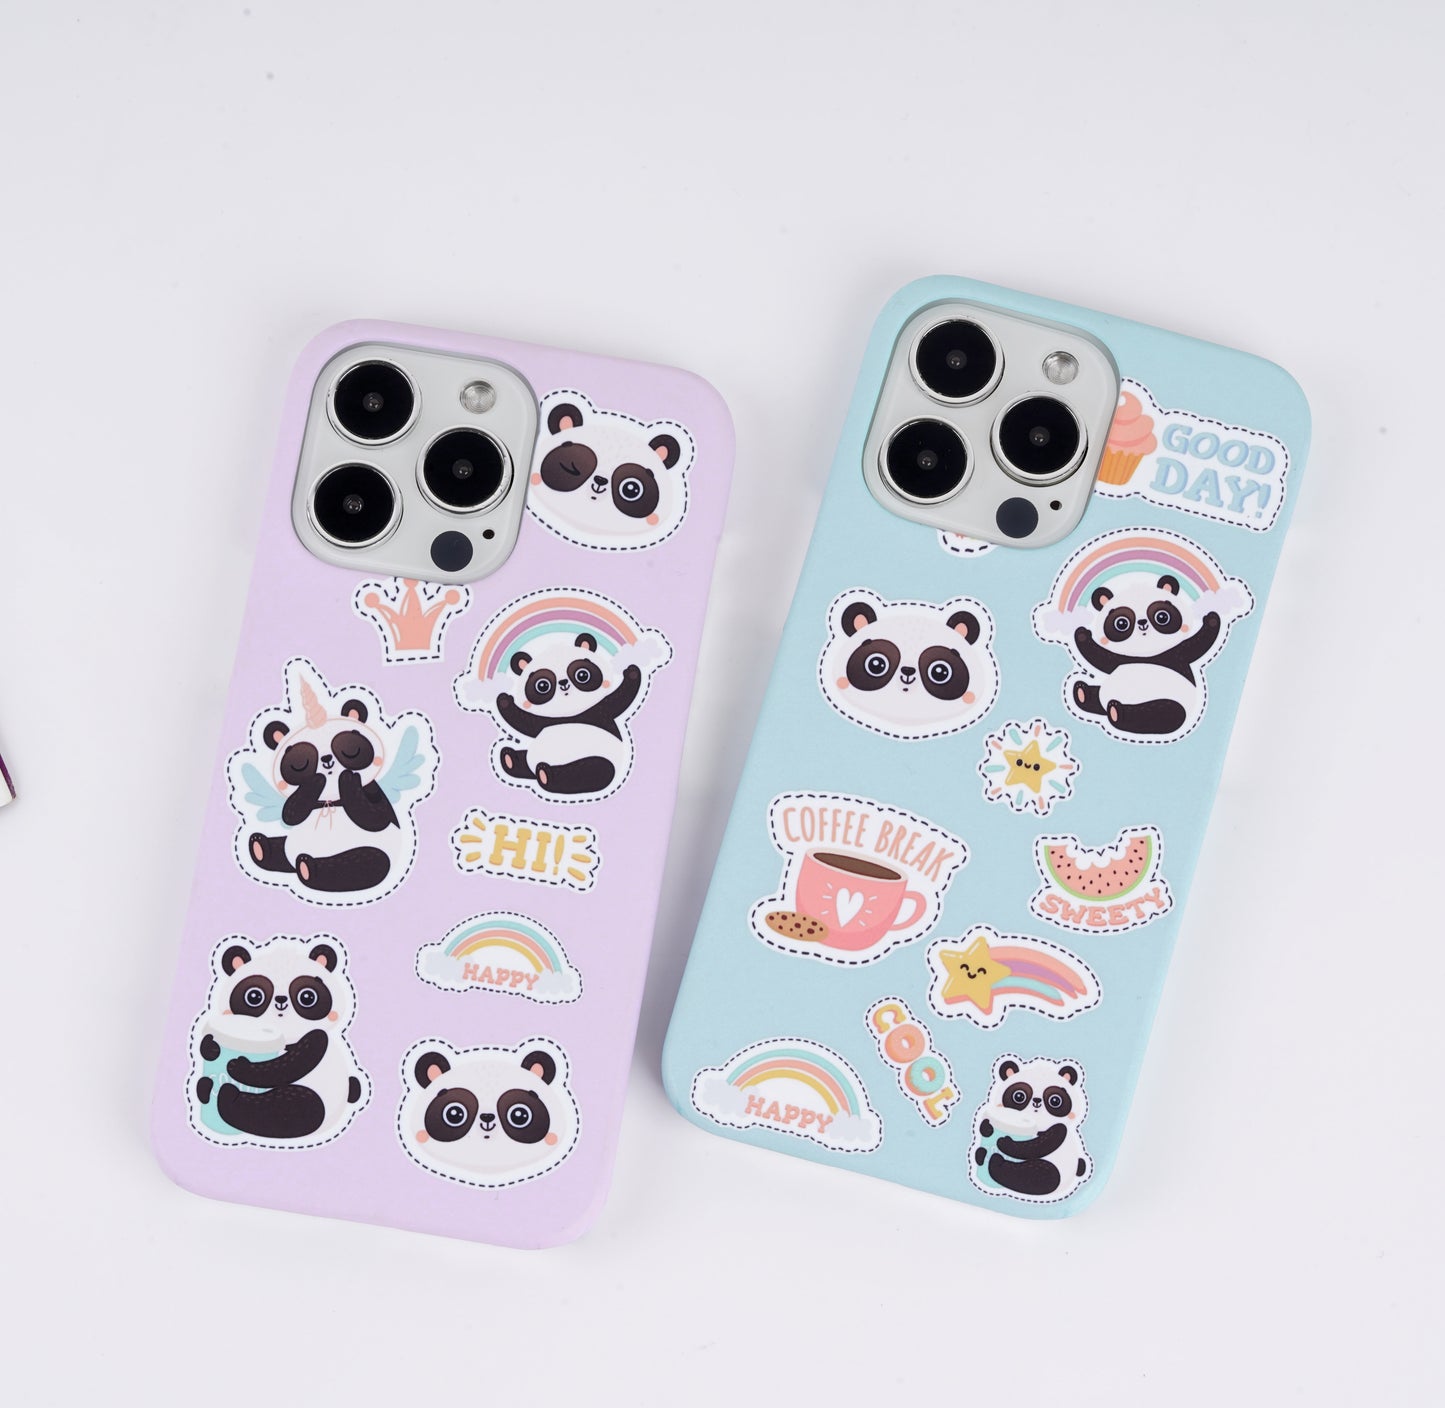 The Happy Panda Slim Case